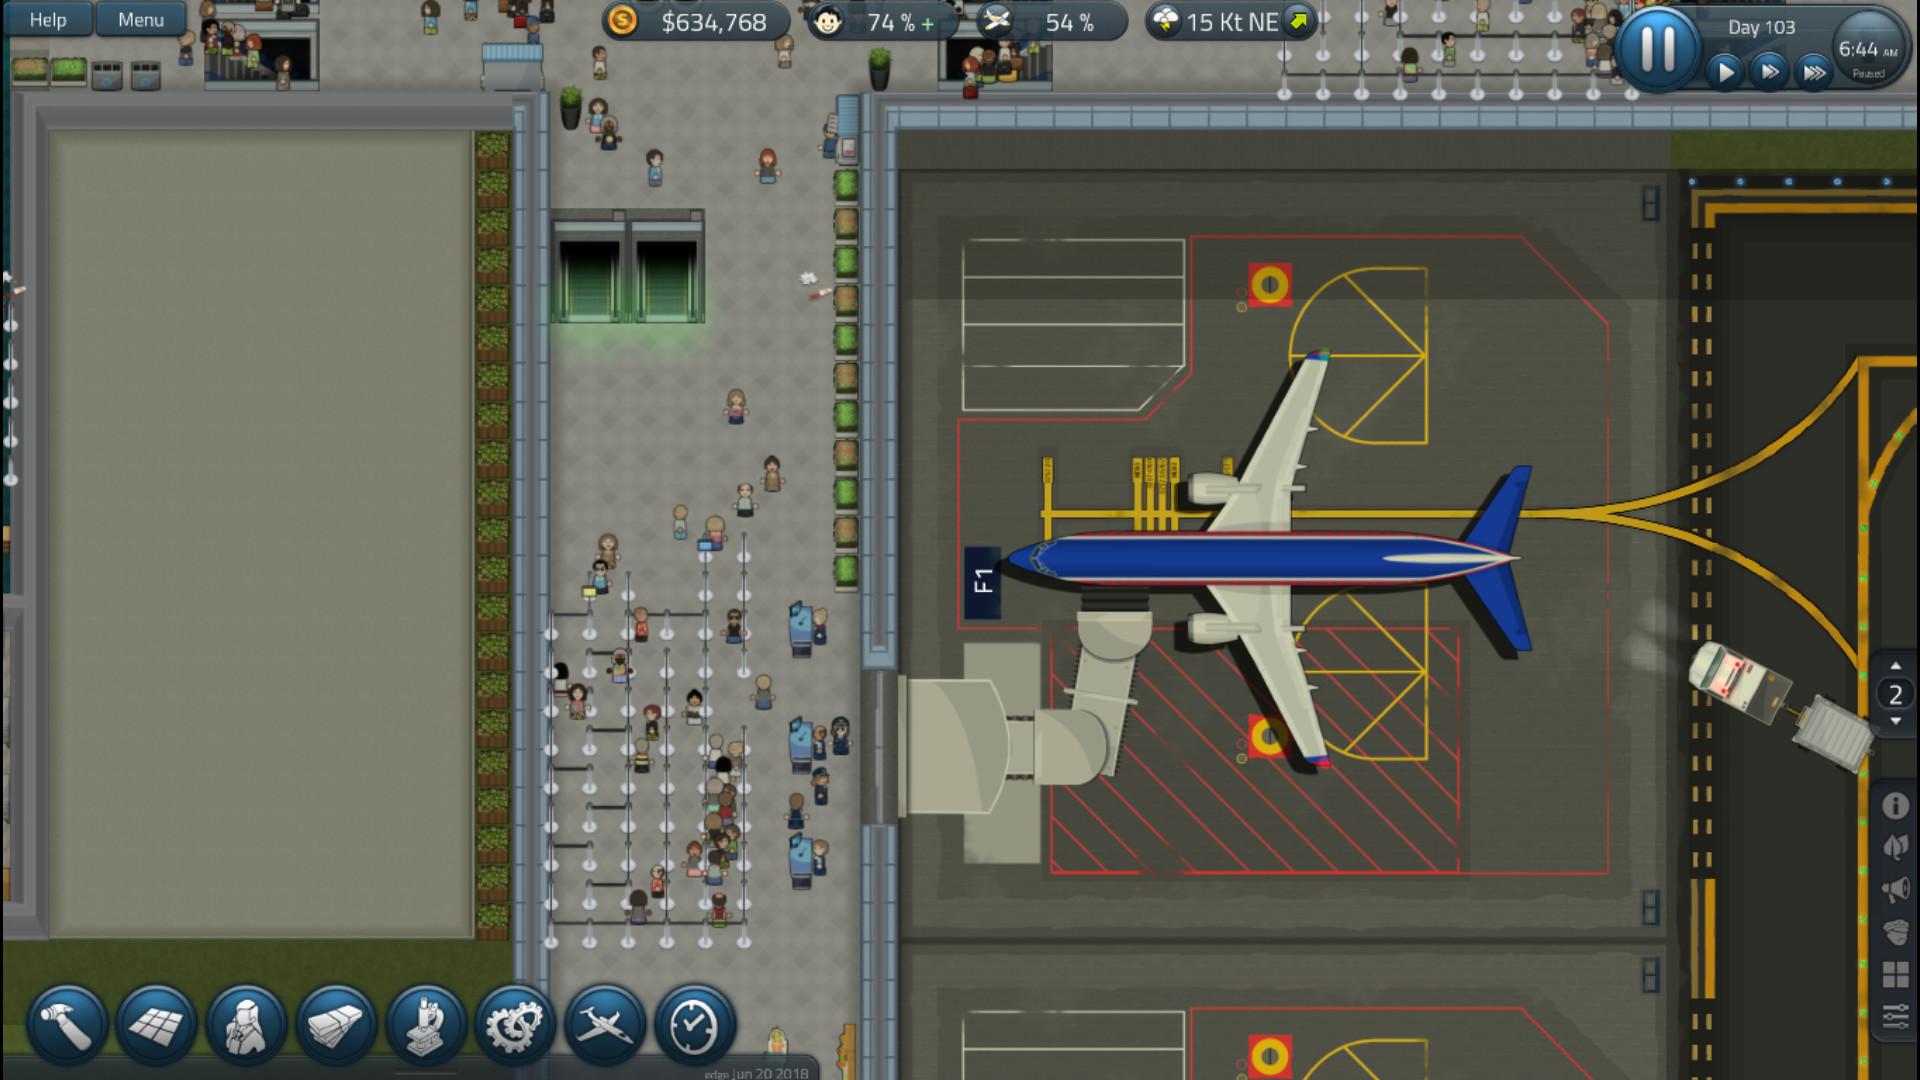 Screenshot №21 from game SimAirport